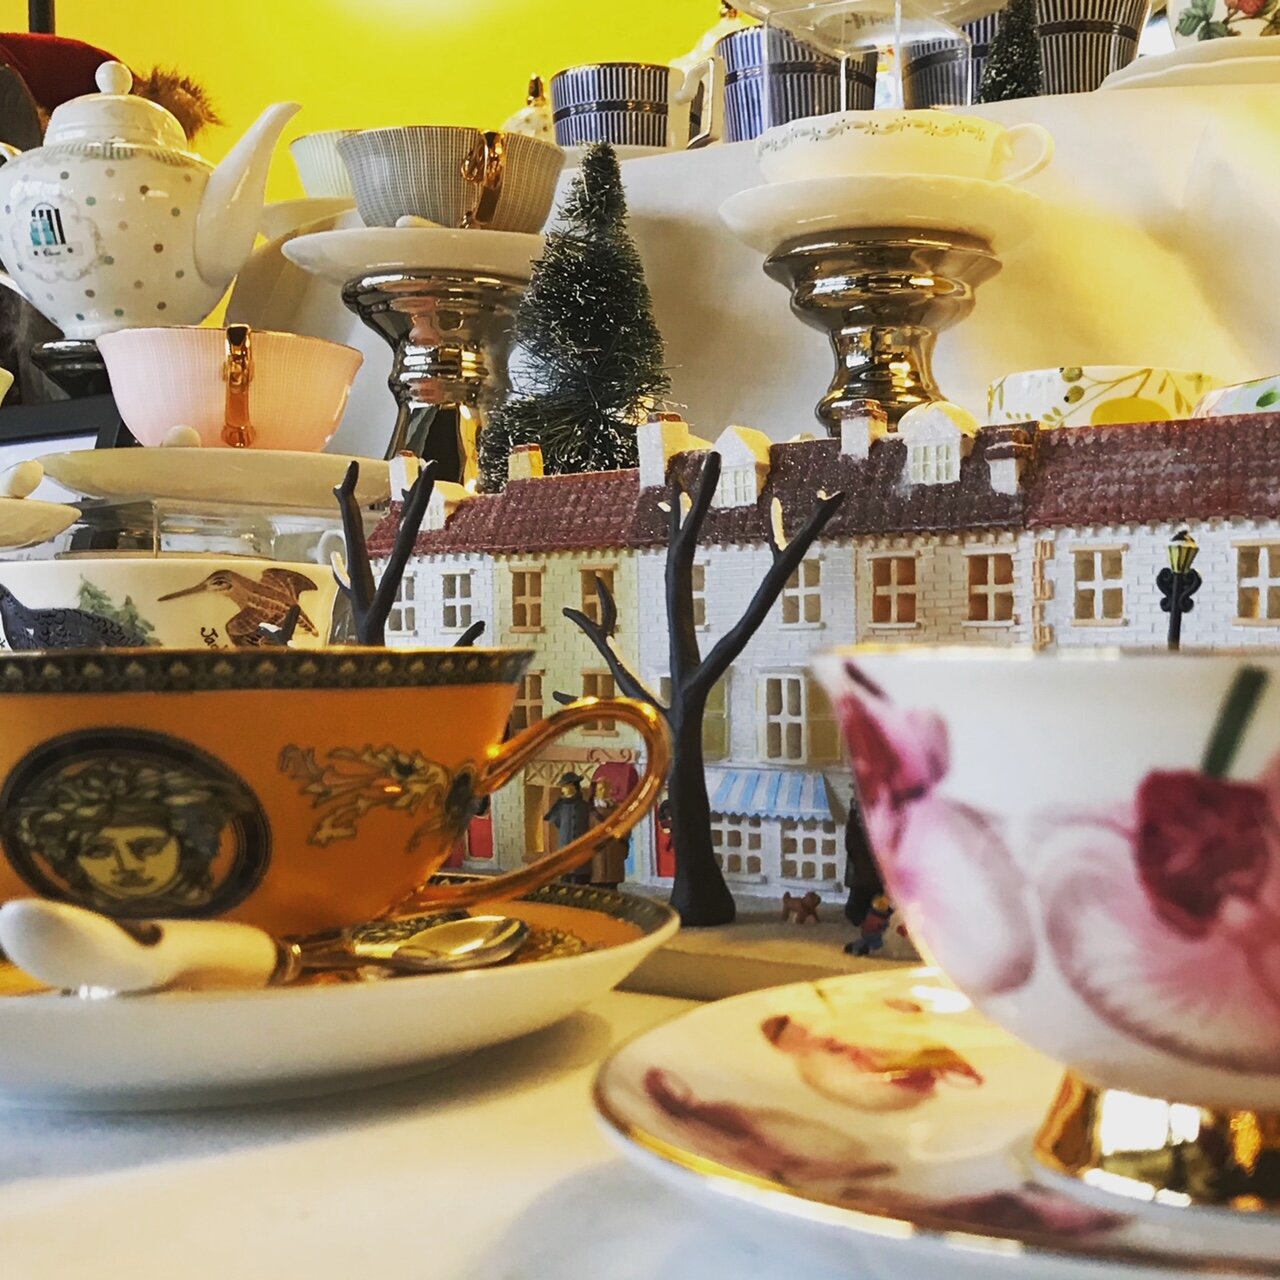 Tea Accessories — THE RENDEZVOUS WITH TEA